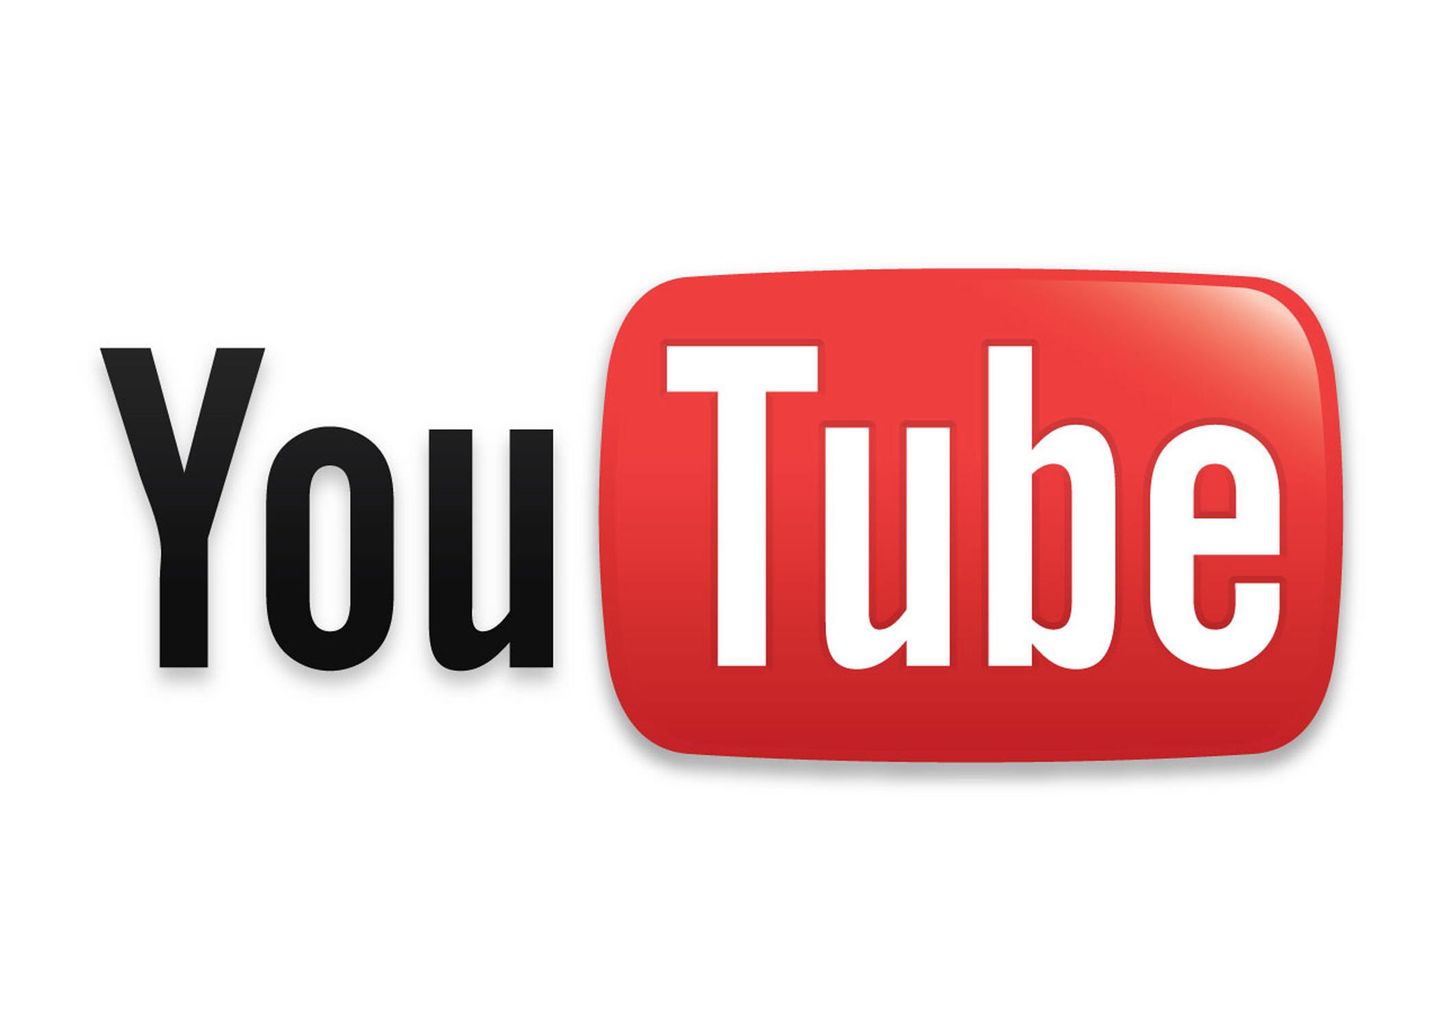 Youtube logo.